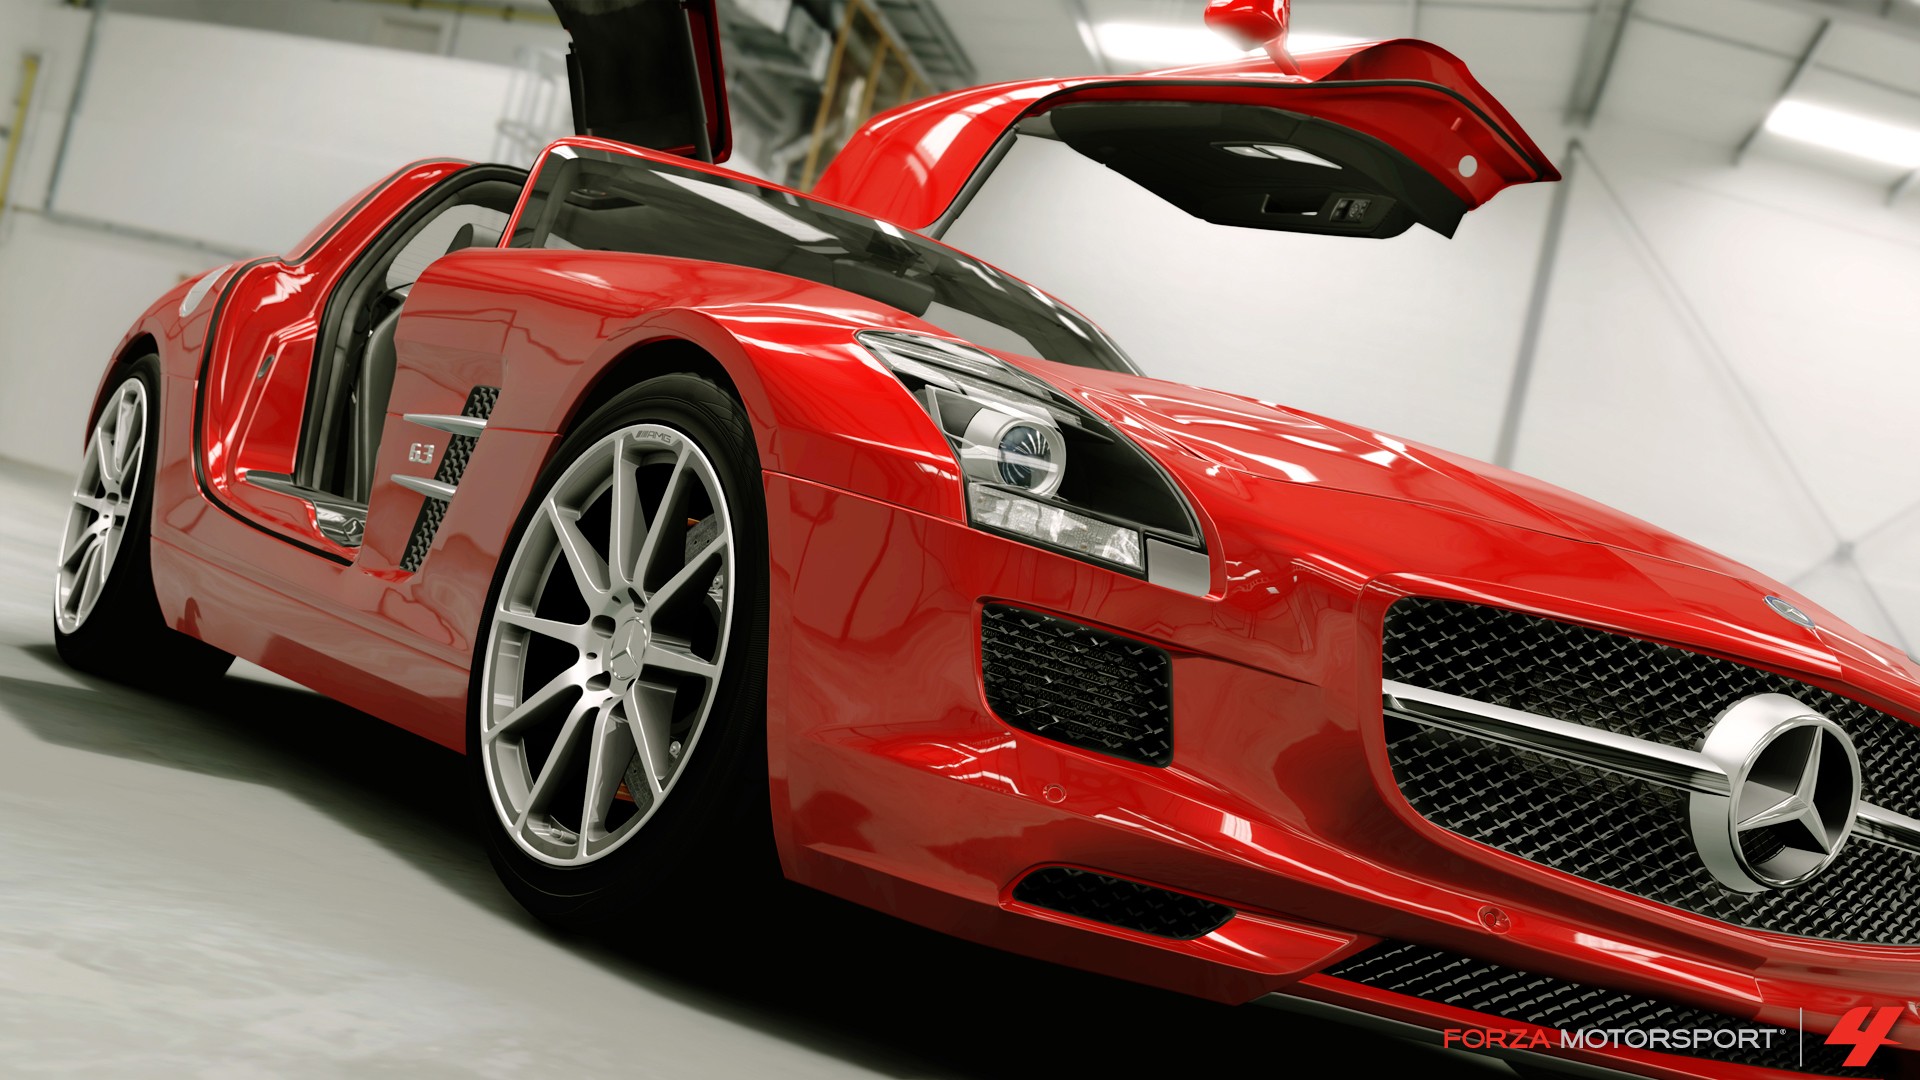 Forza Motorsport Forza Motorsport 4 Car Video Games 1920x1080